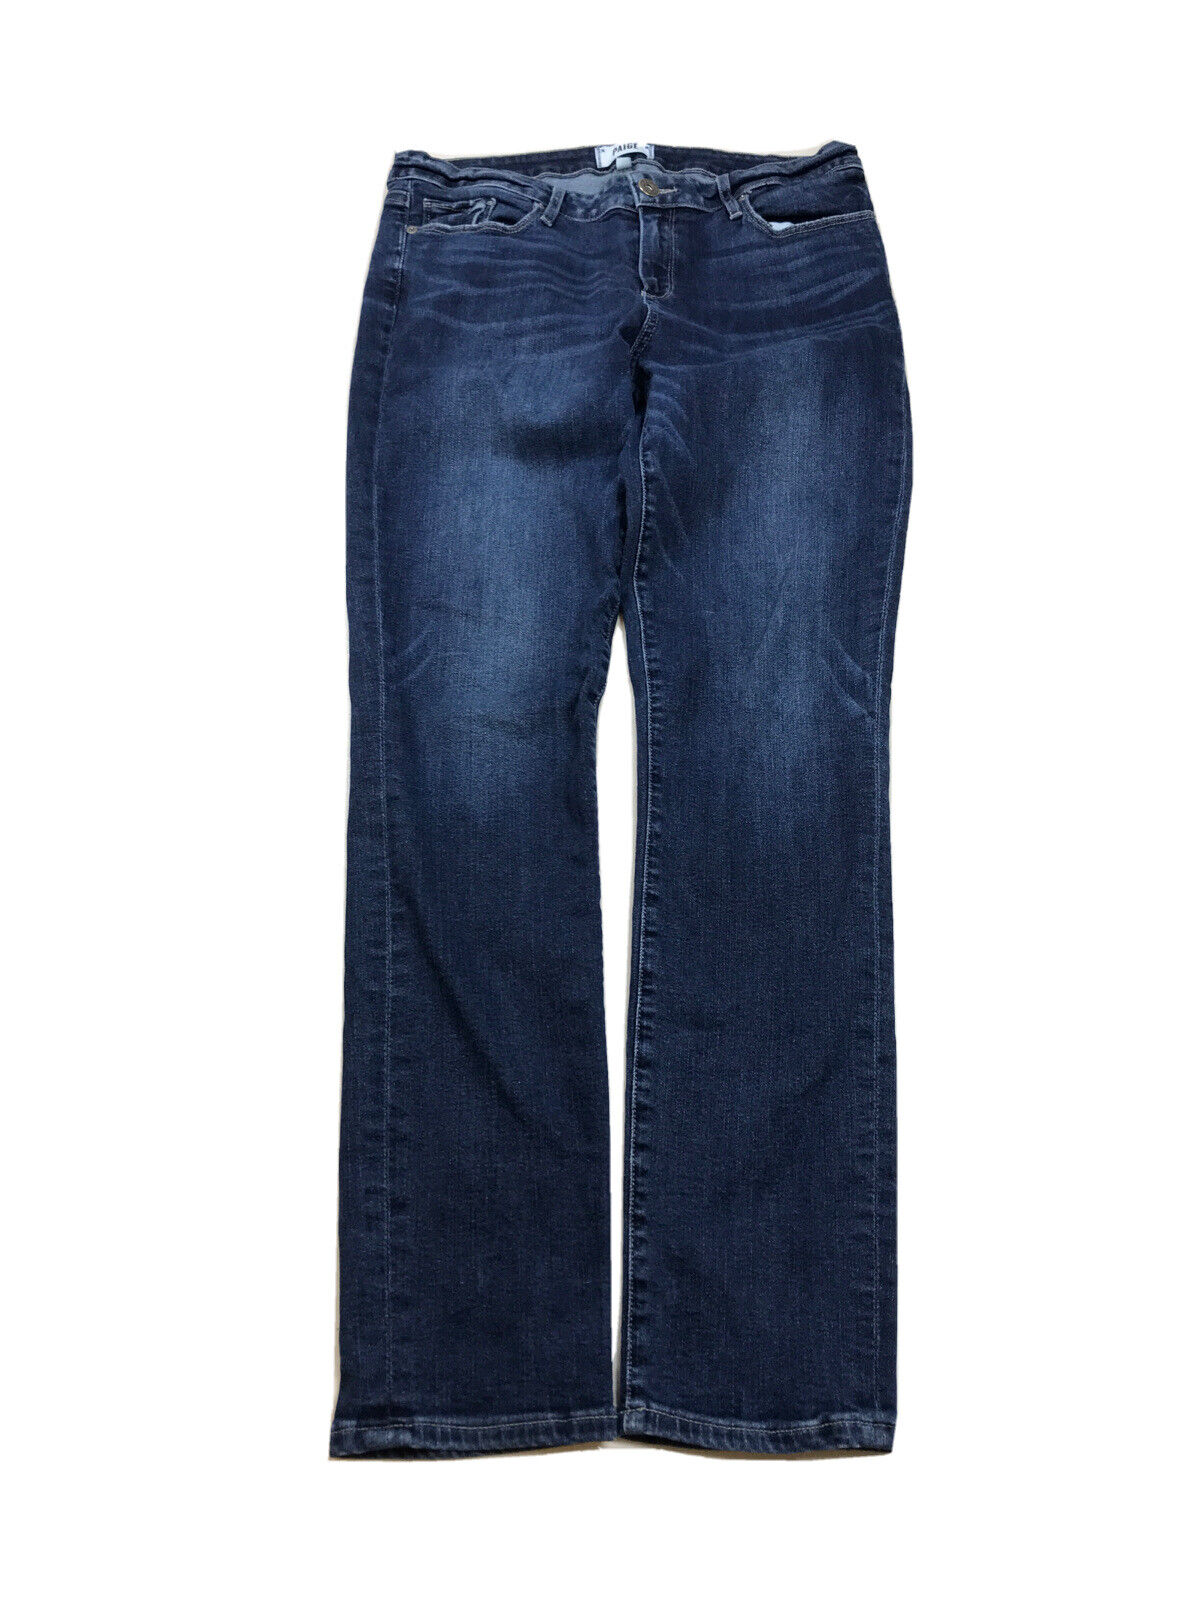 Paige Women's Medium Wash Skyline Skinny Denim Jeans - 31